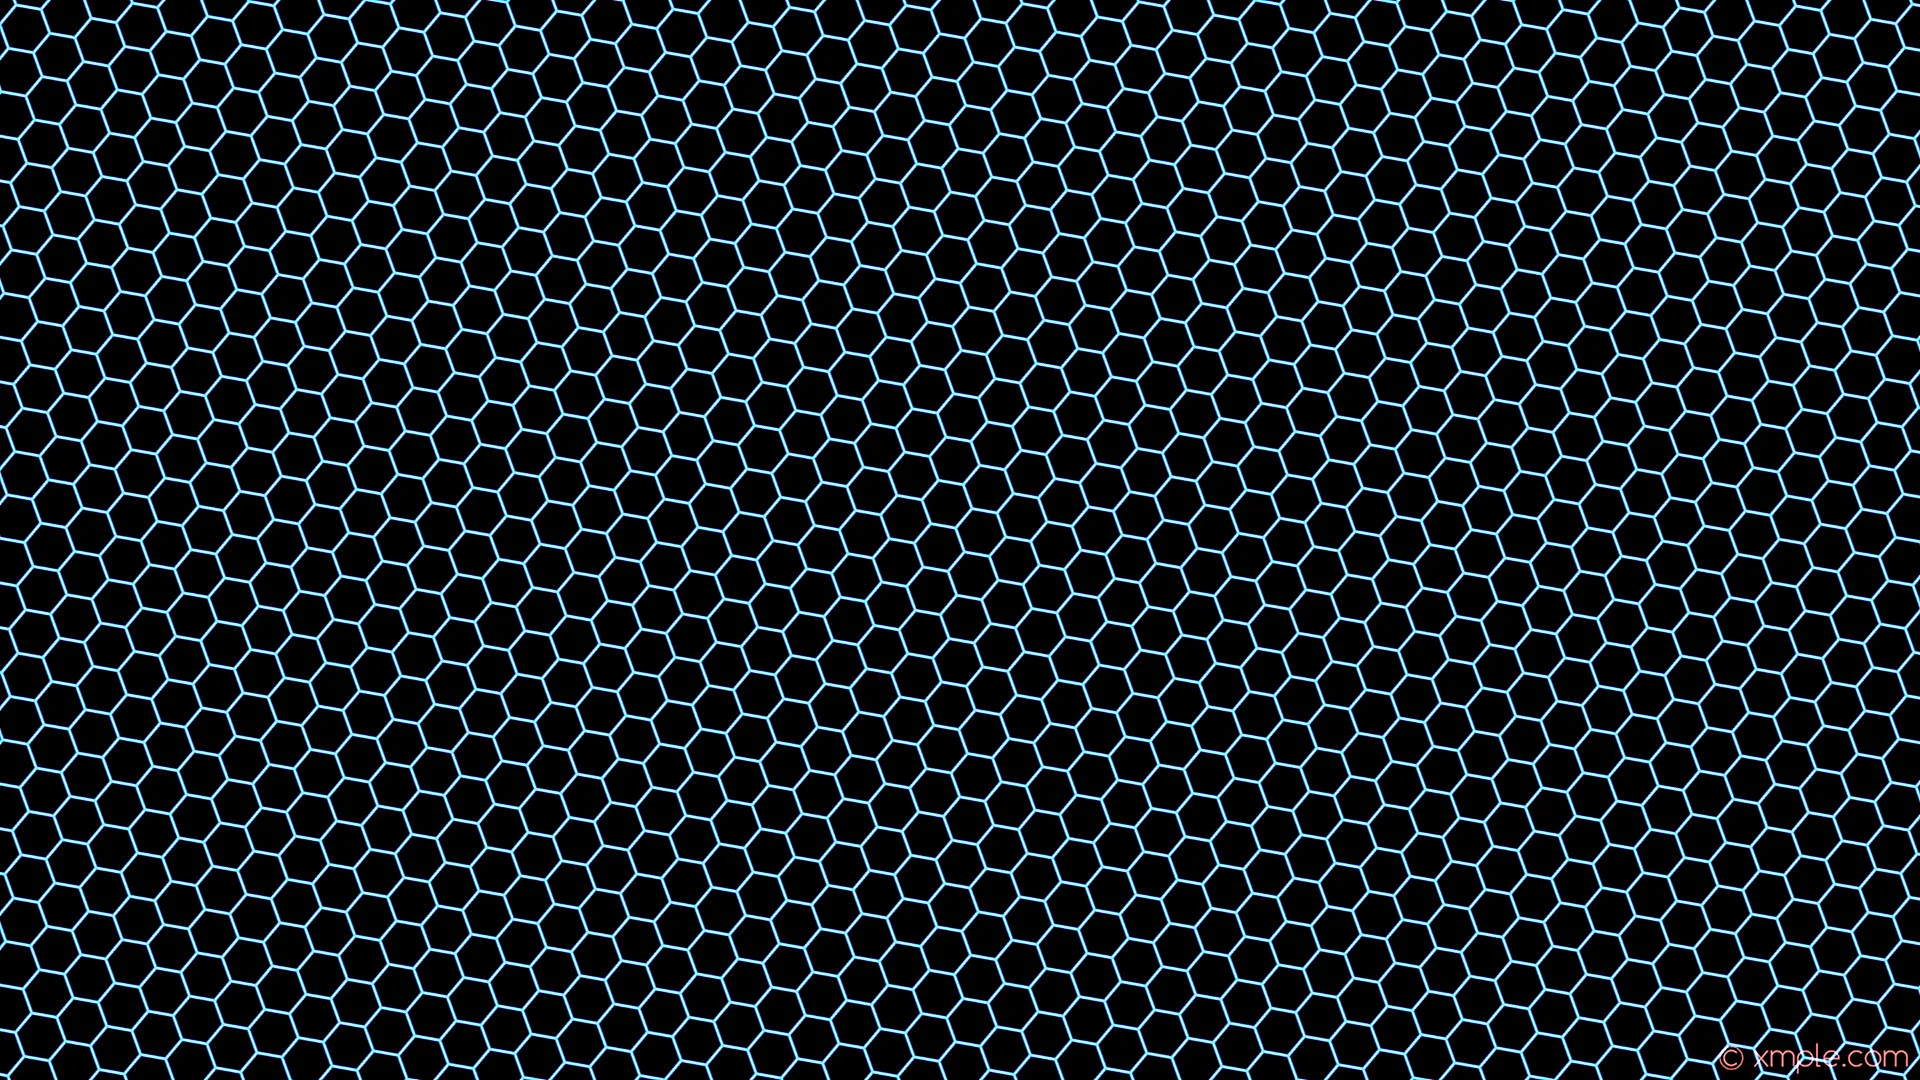 Honeycomb Pattern Wallpaper